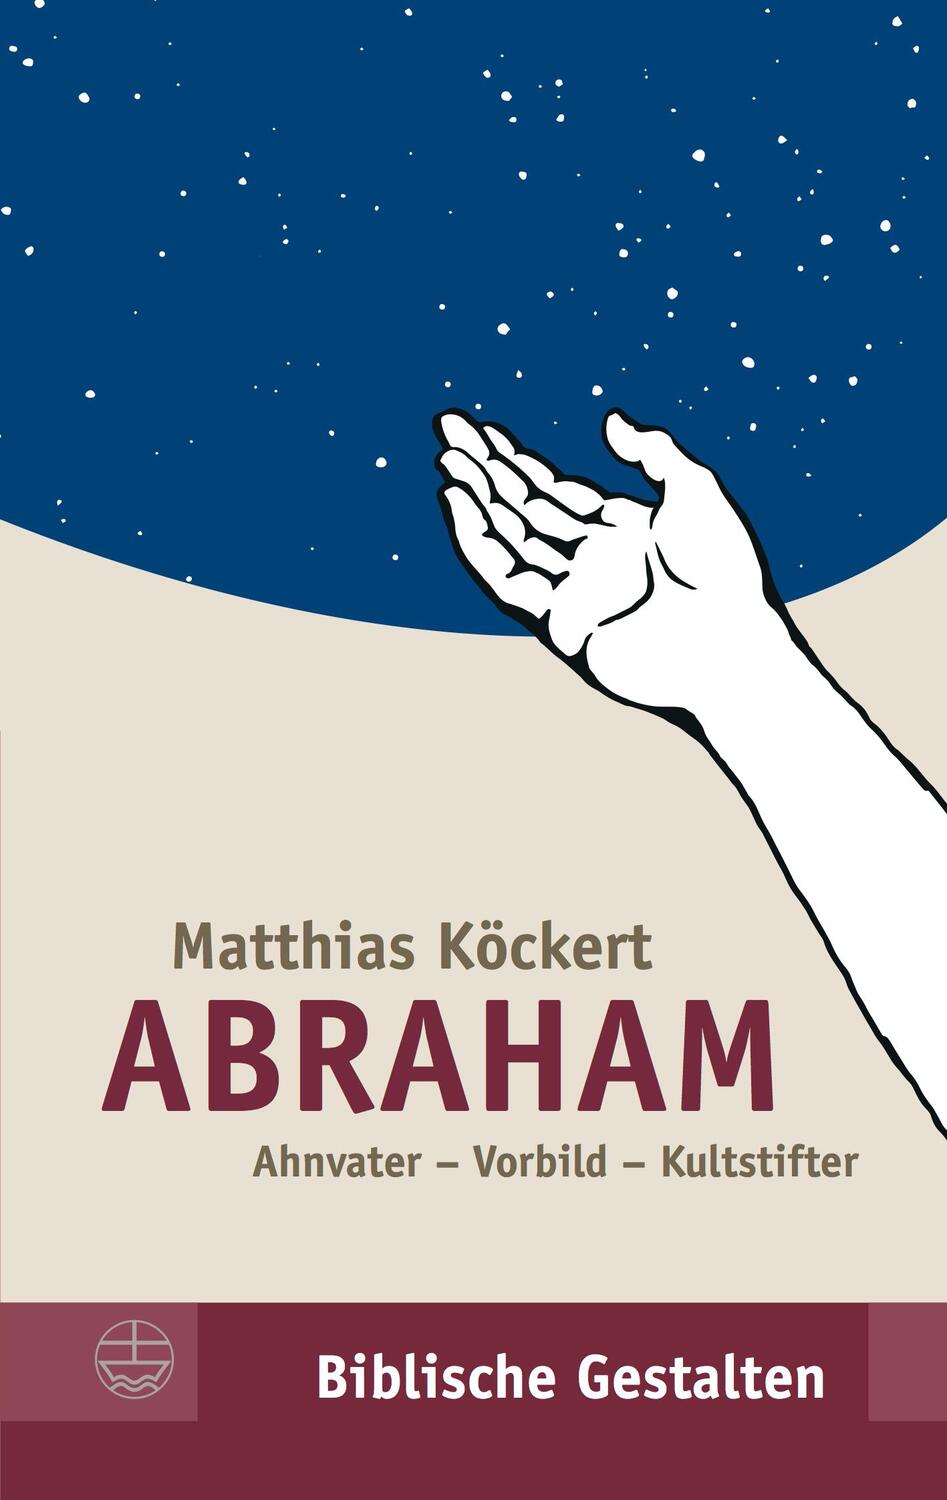 Abraham - Köckert, Matthias